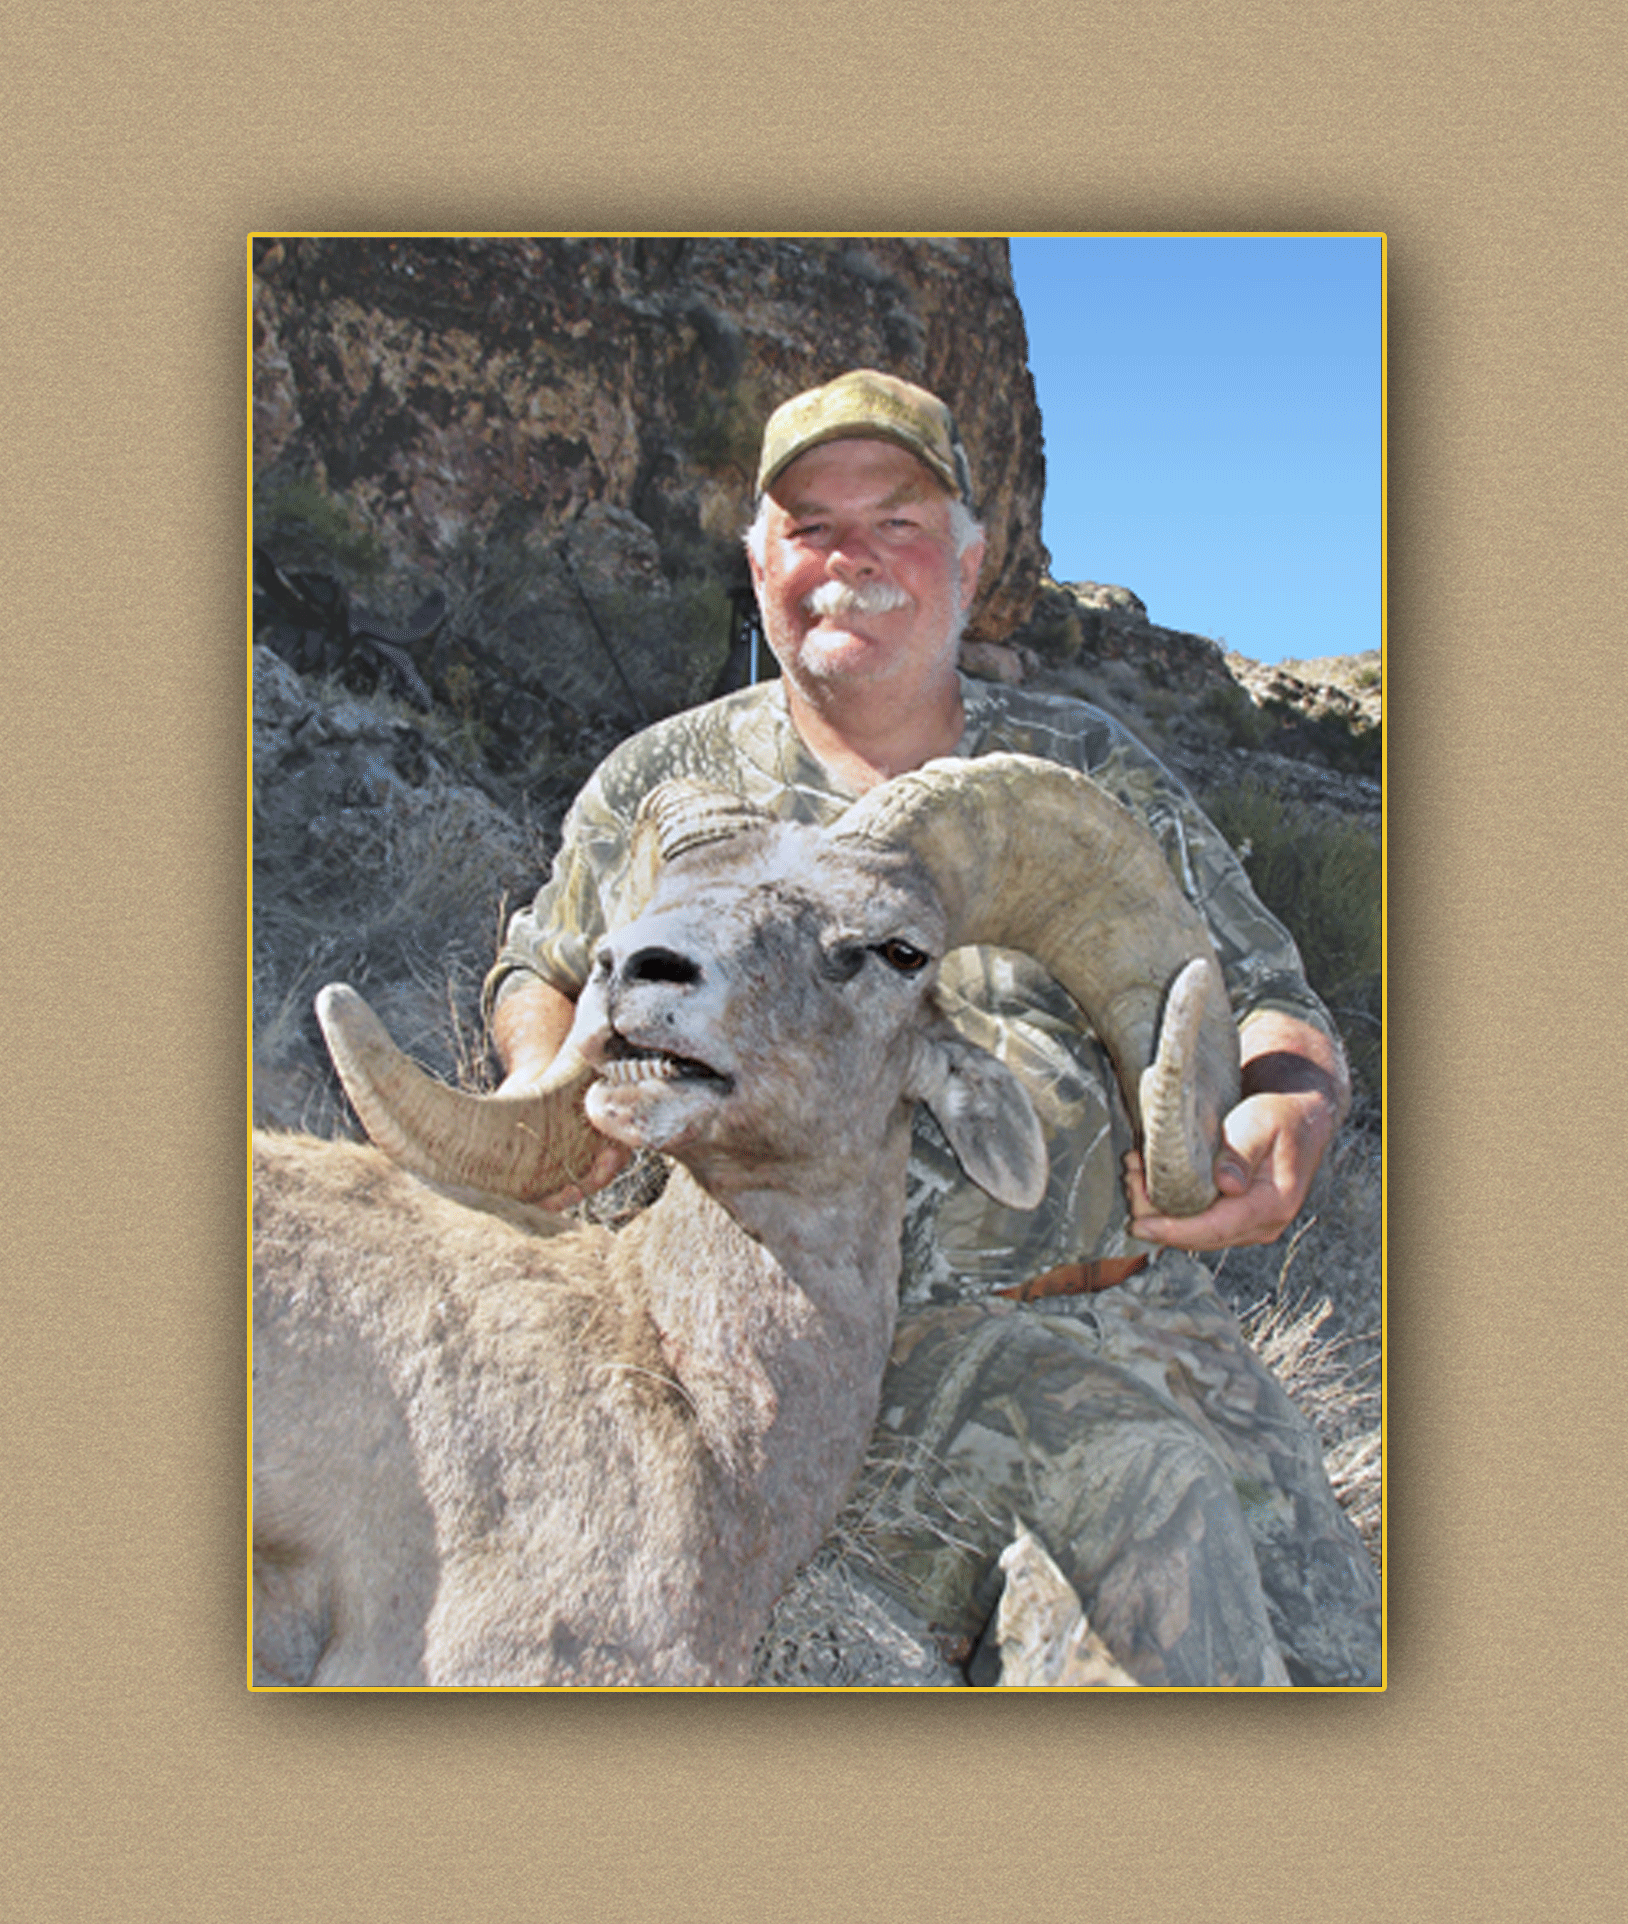 yellowhorn outfitters arizona hunting yellowhorn outfitters arizona bighorn sheep guiding outfitting deer elk antelope photography